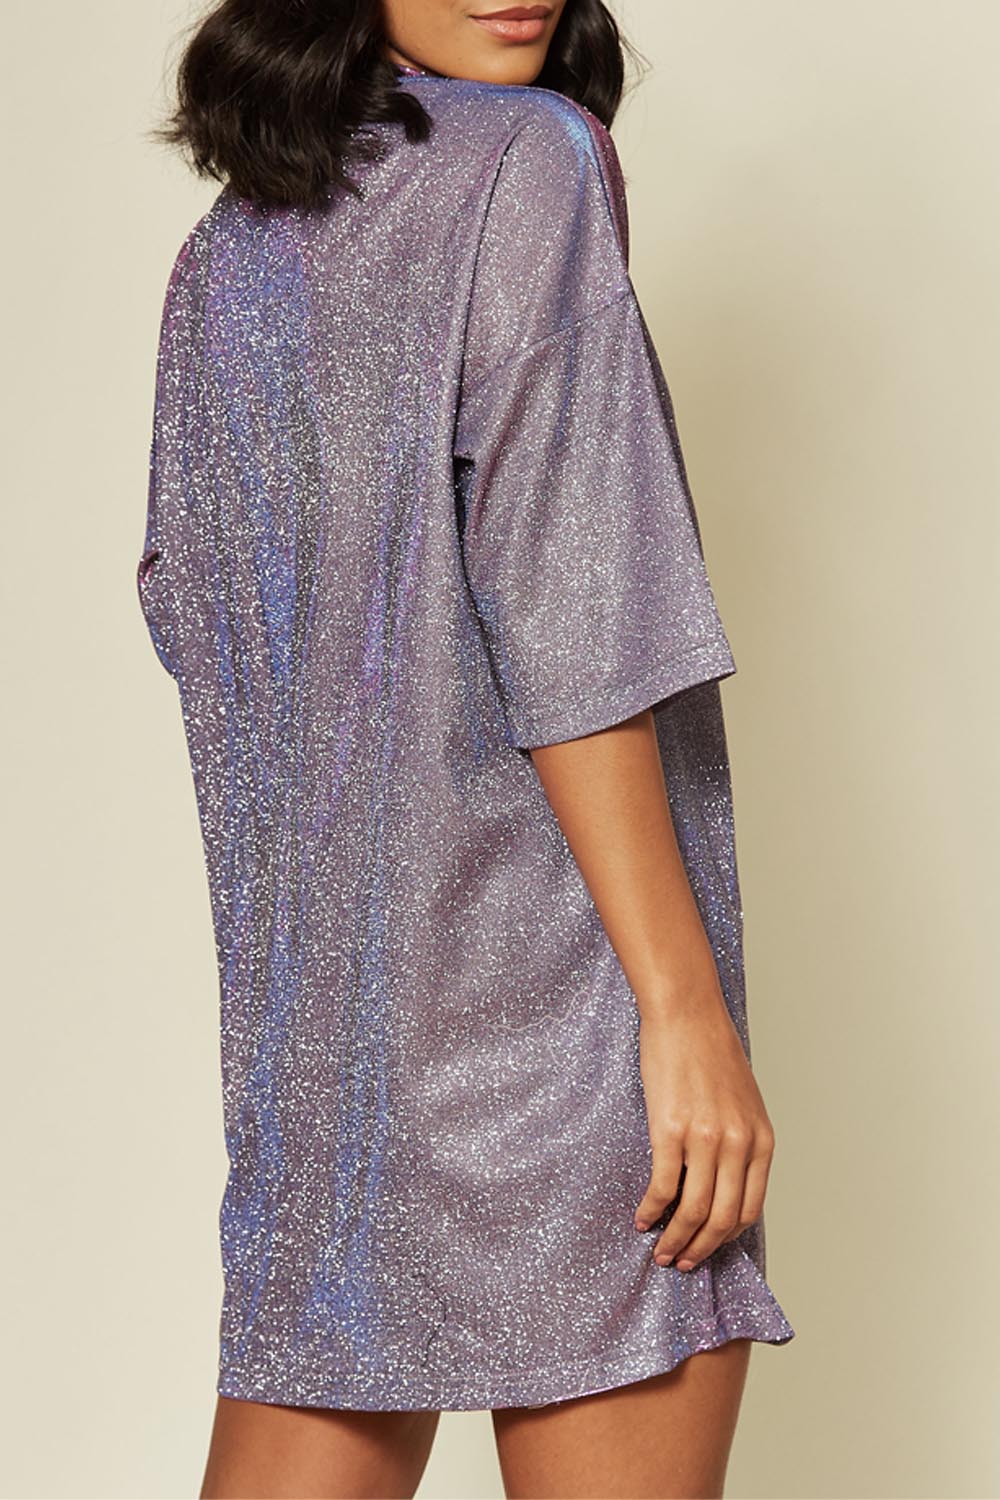 Iridescent Sparkly T-Shirt Dress (Single Piece)